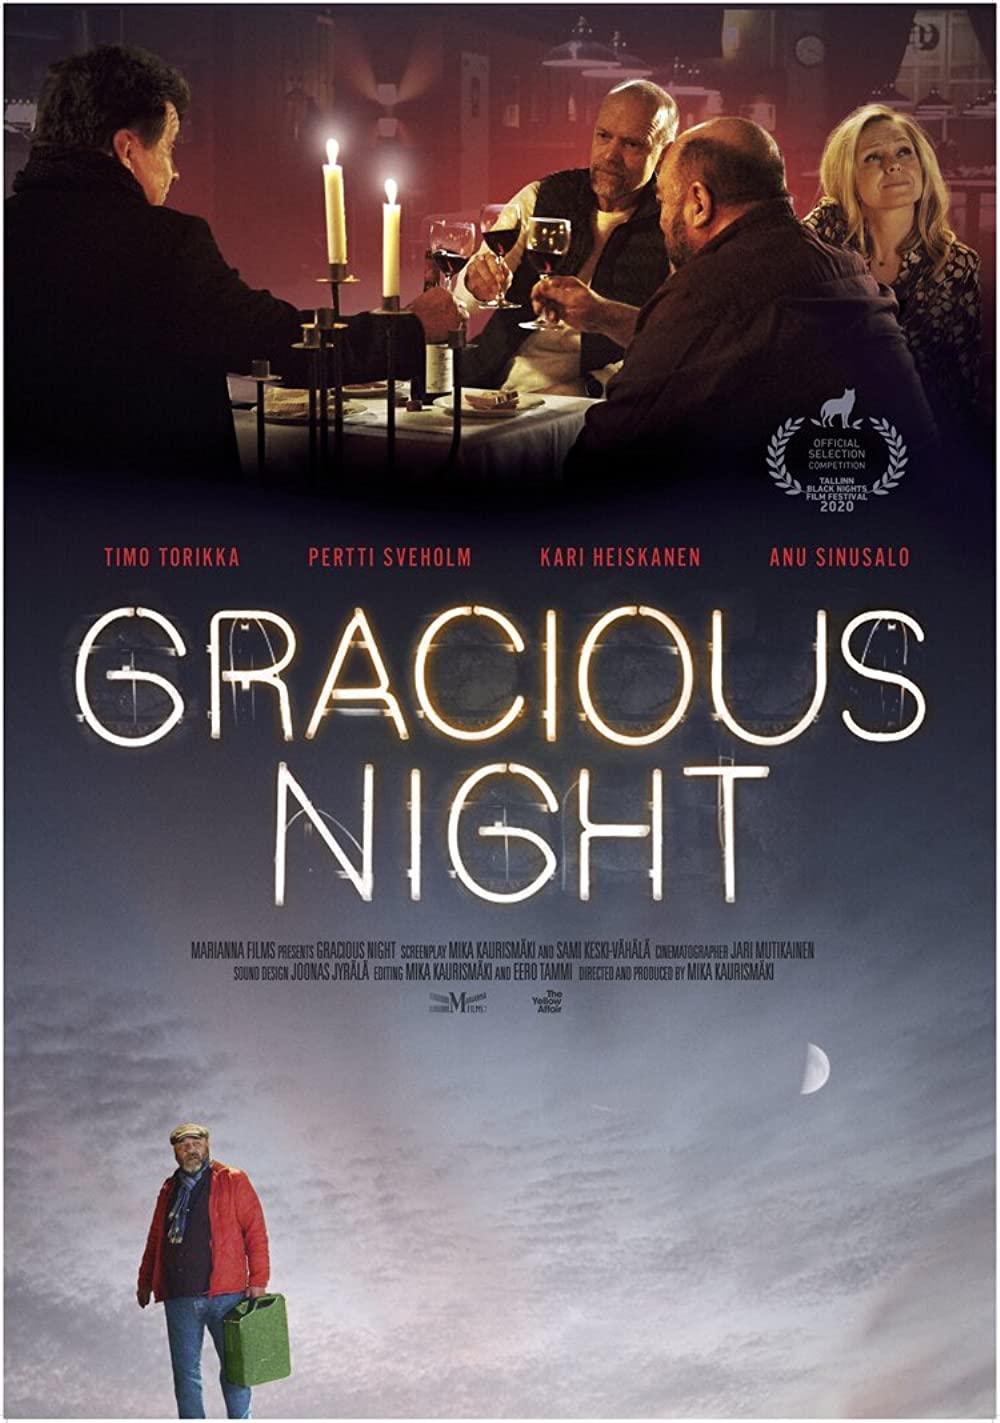 Filmbeschreibung zu Gracious Night